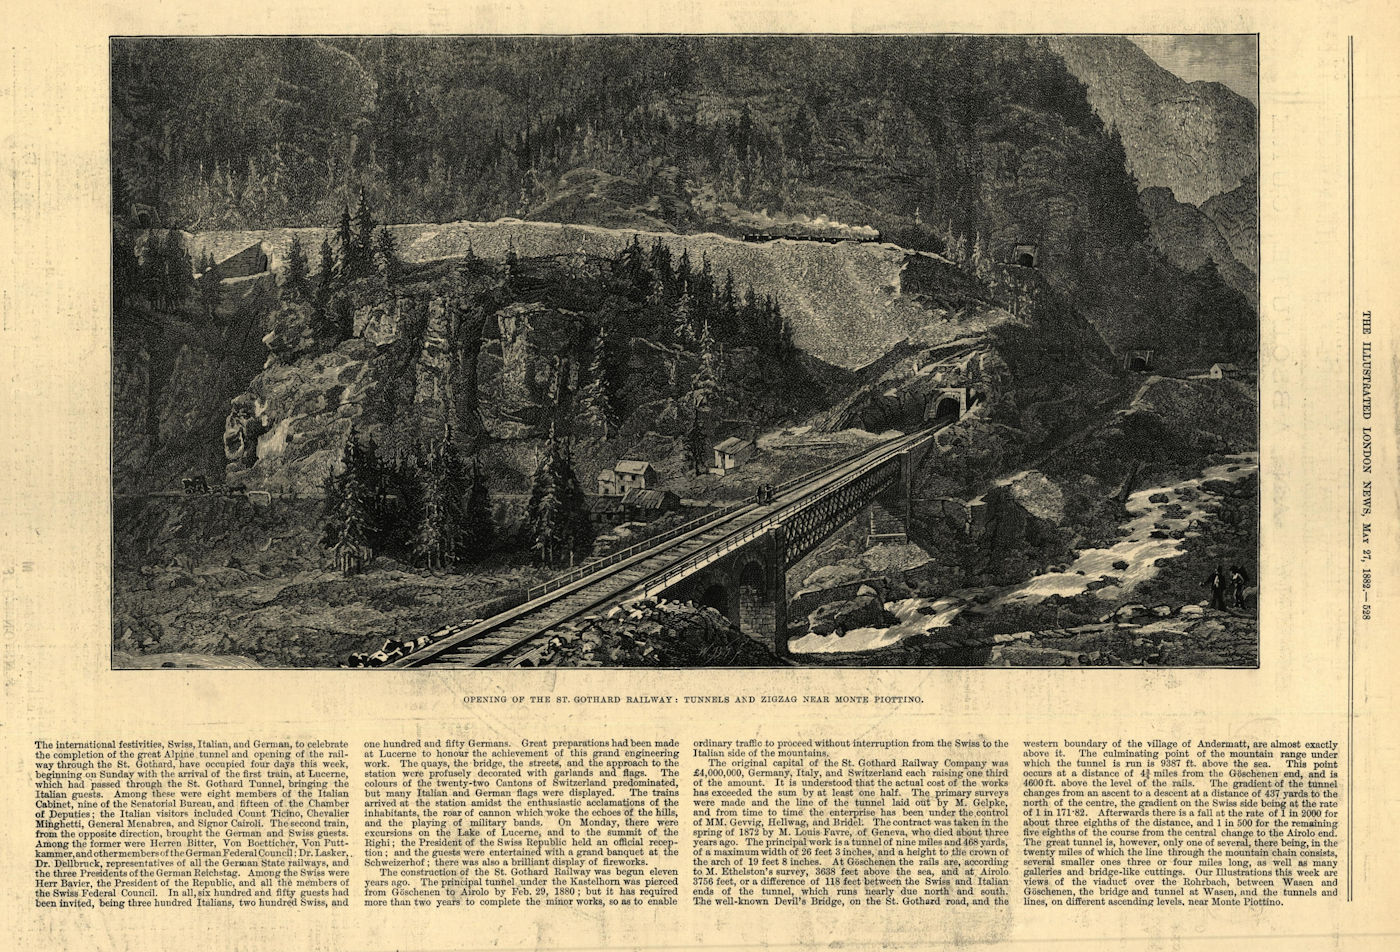 Associate Product St. Gothard Railway: tunnels & zigzag near Monte Piottino. Switzerland 1882